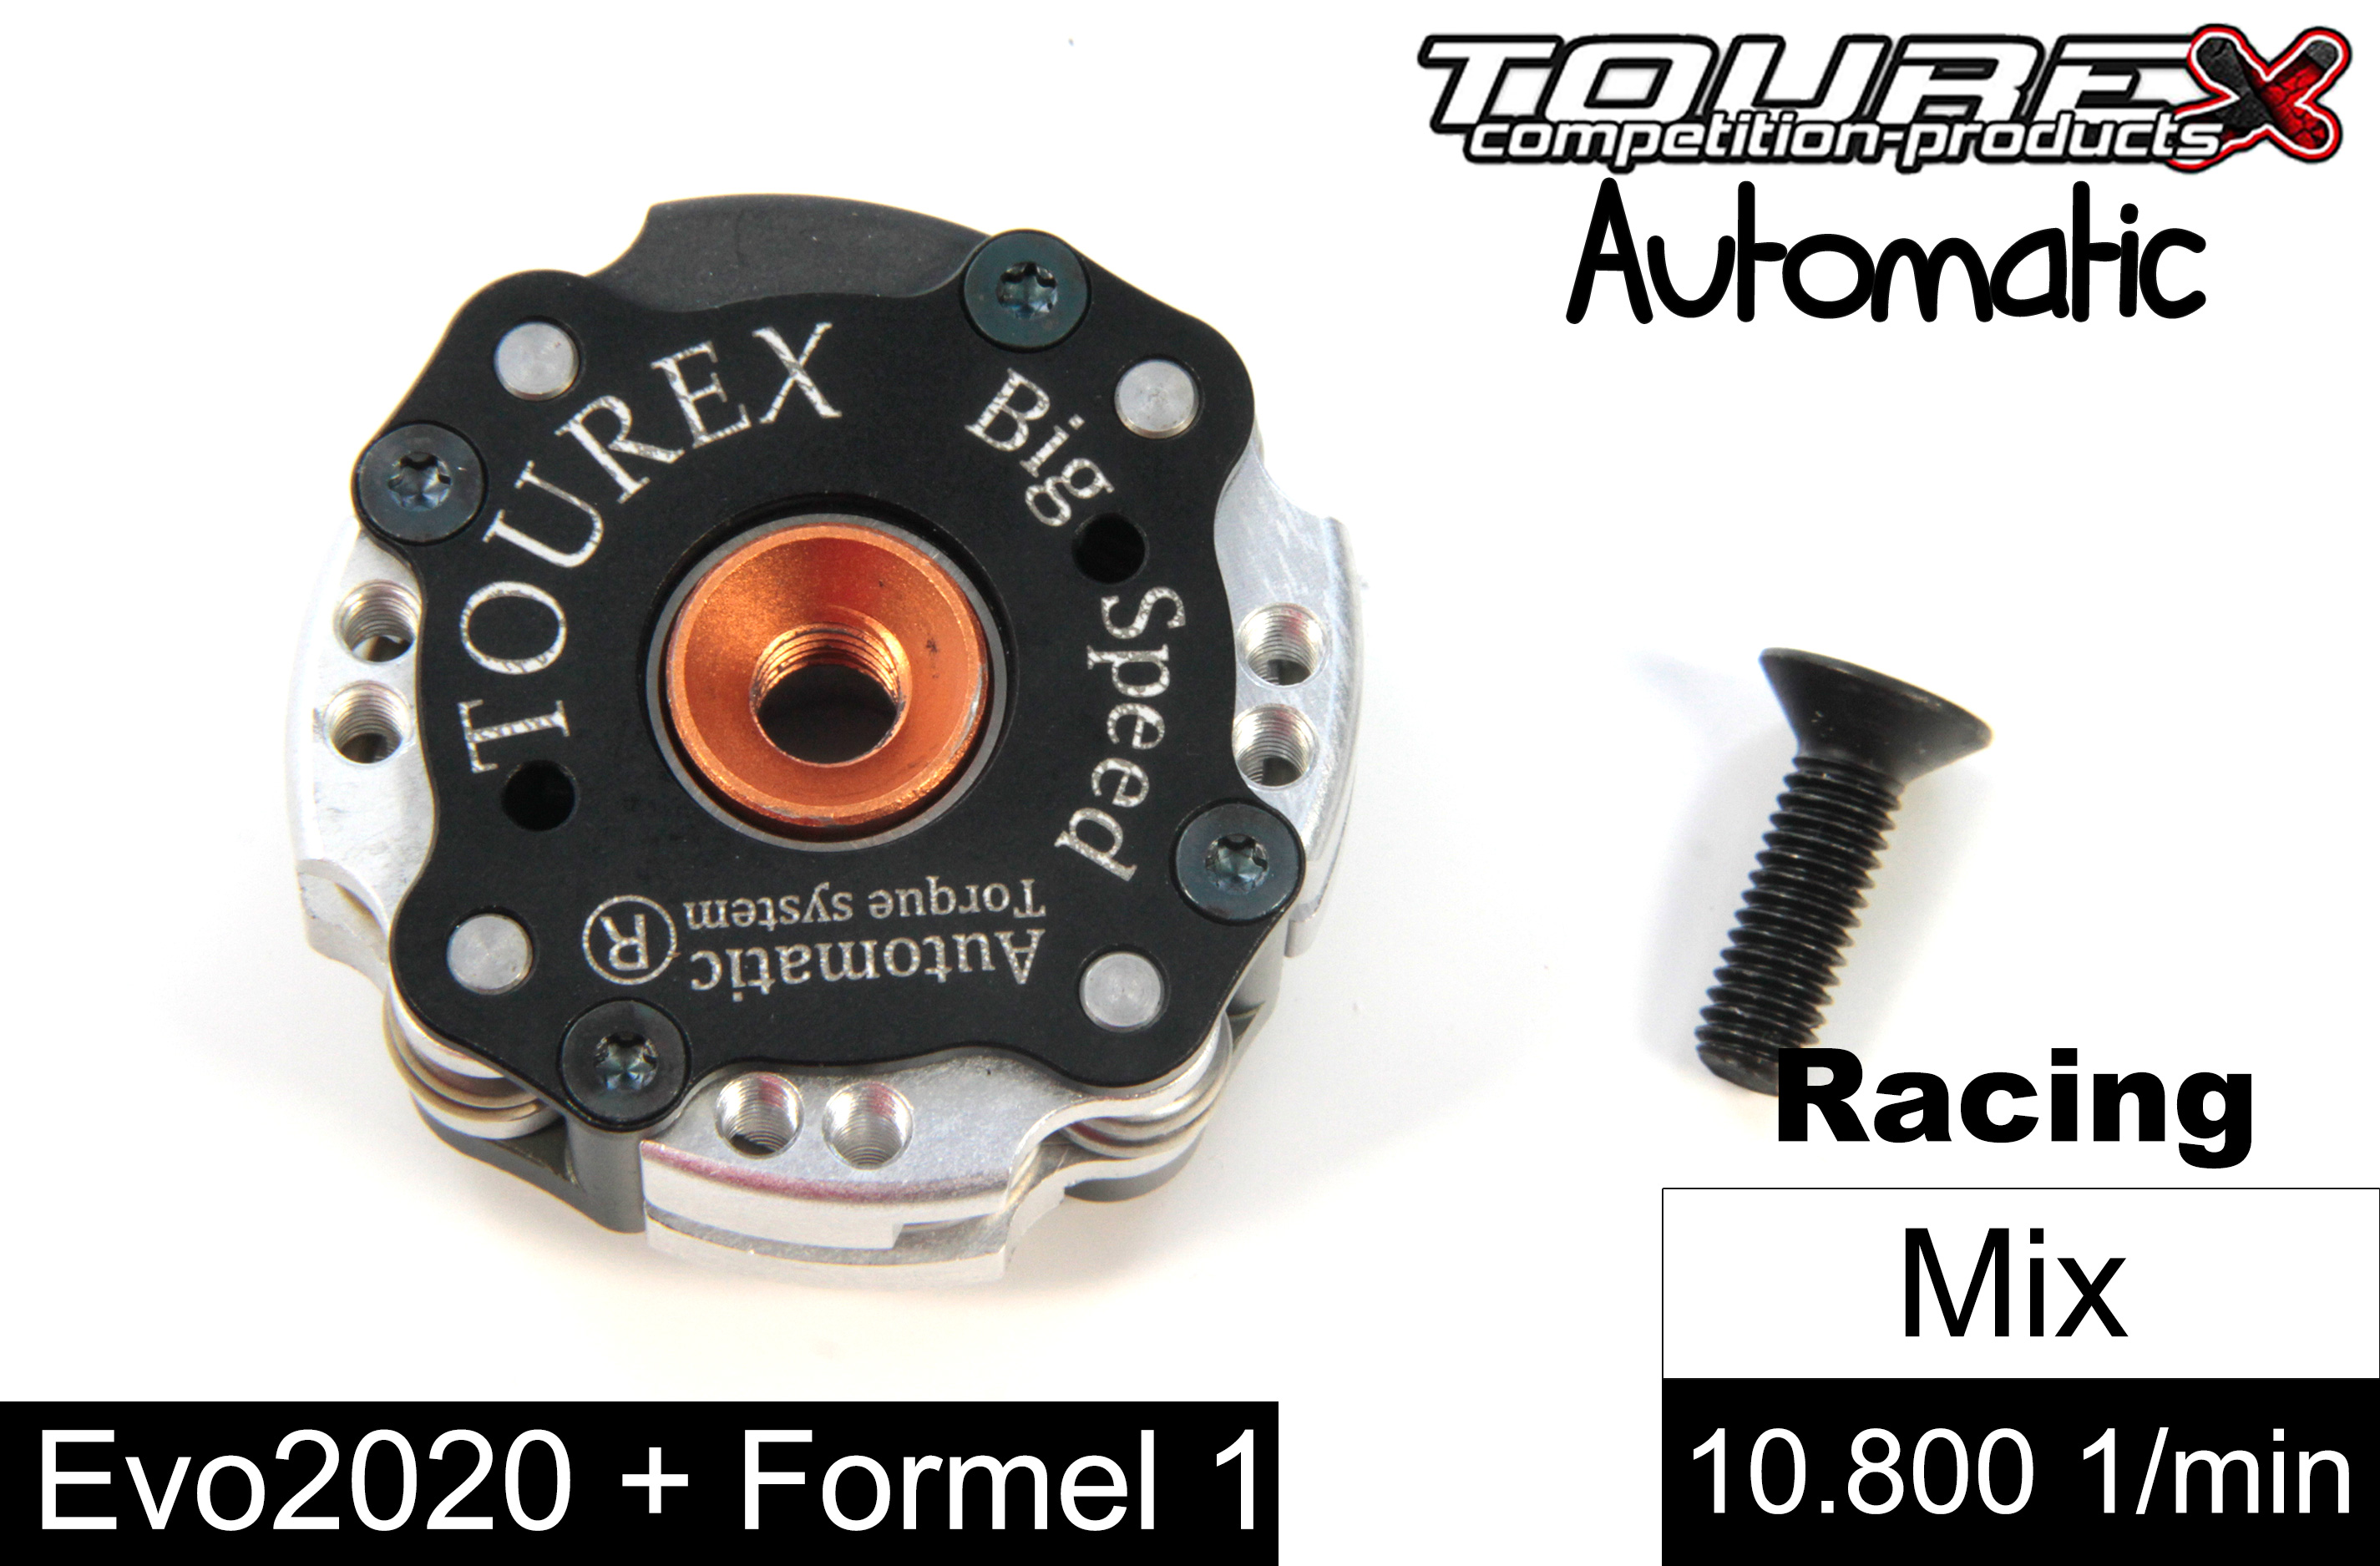 TXLA-910-F1-MIX Tourex Big-Speed Automatic for FG Formula 1 and Evo 2020